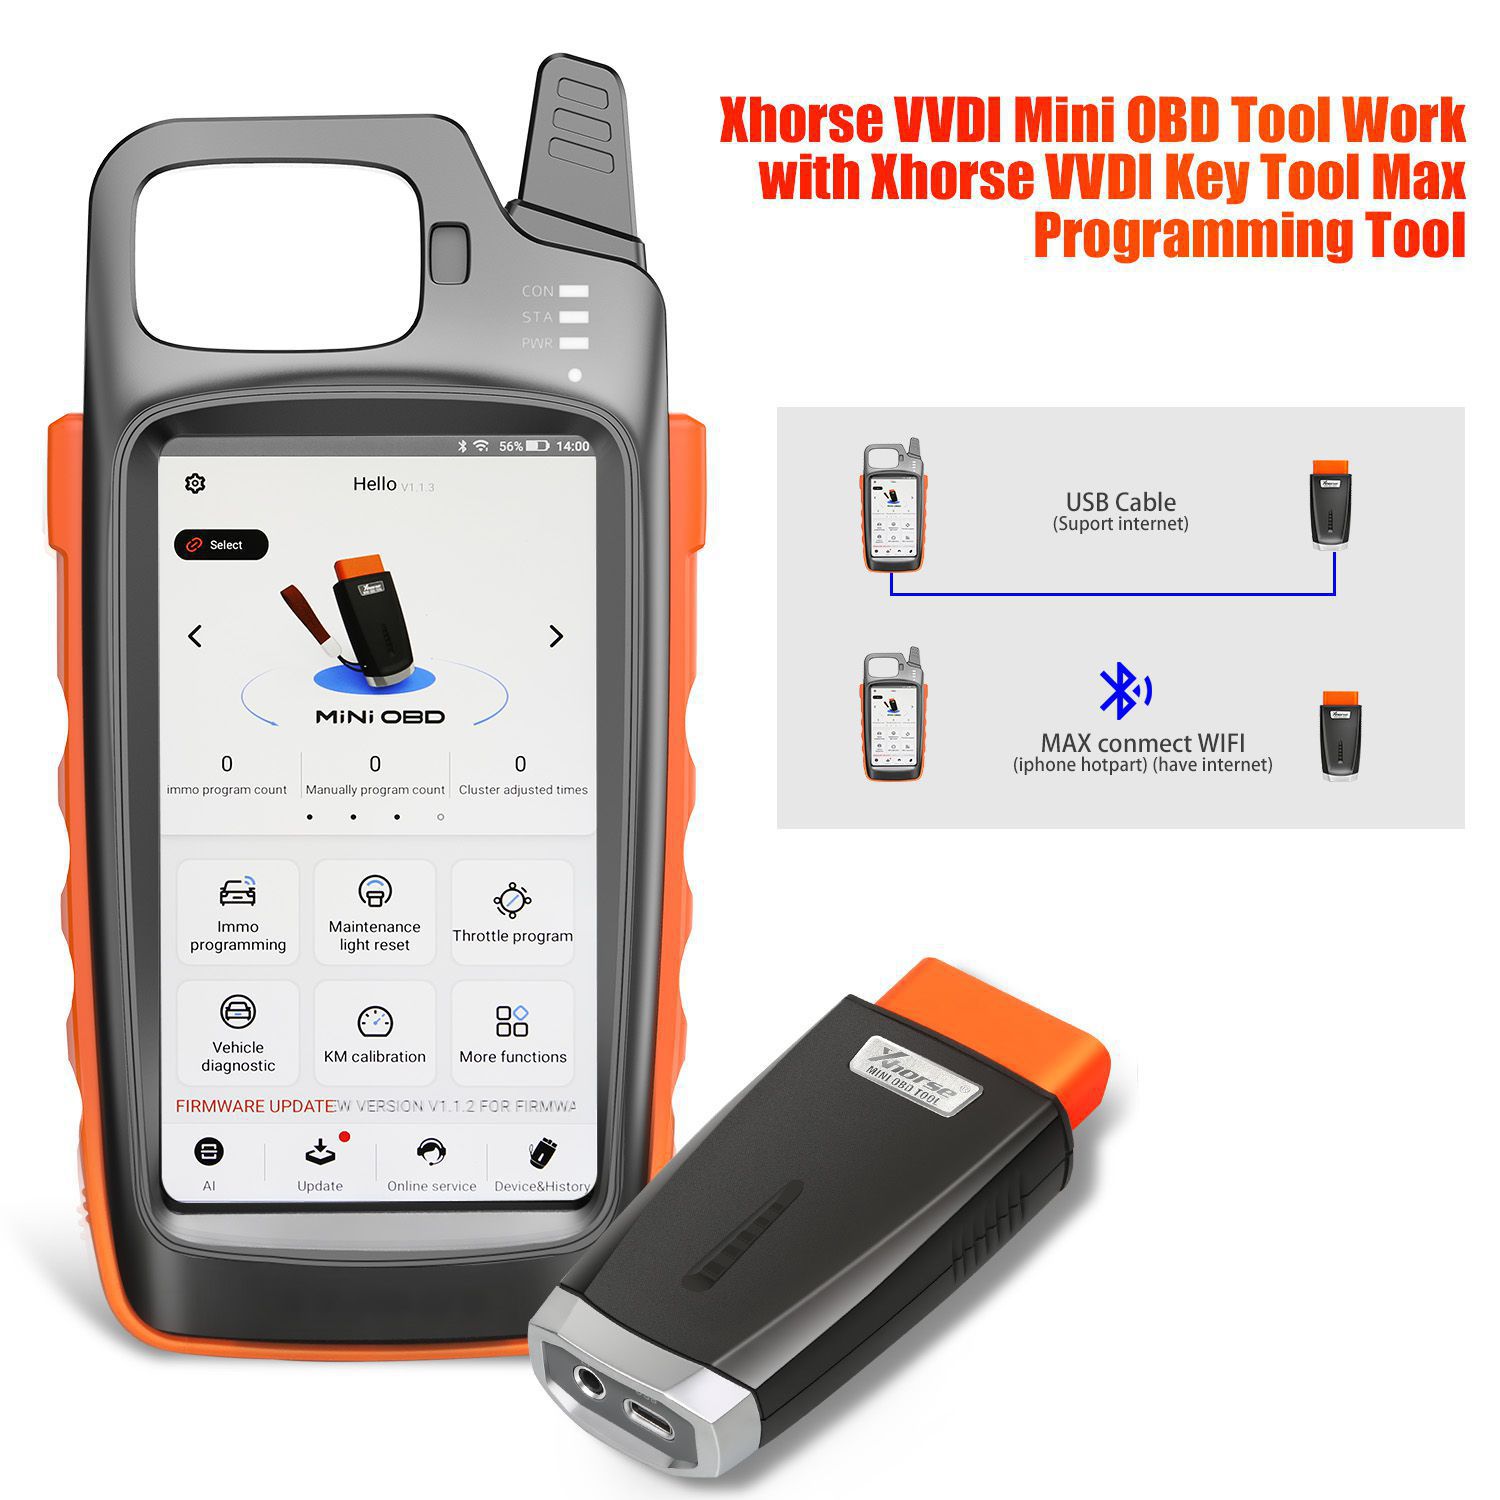 VVDI Mini OBD Tool Work for Xhorse VVDI Key Tool Max